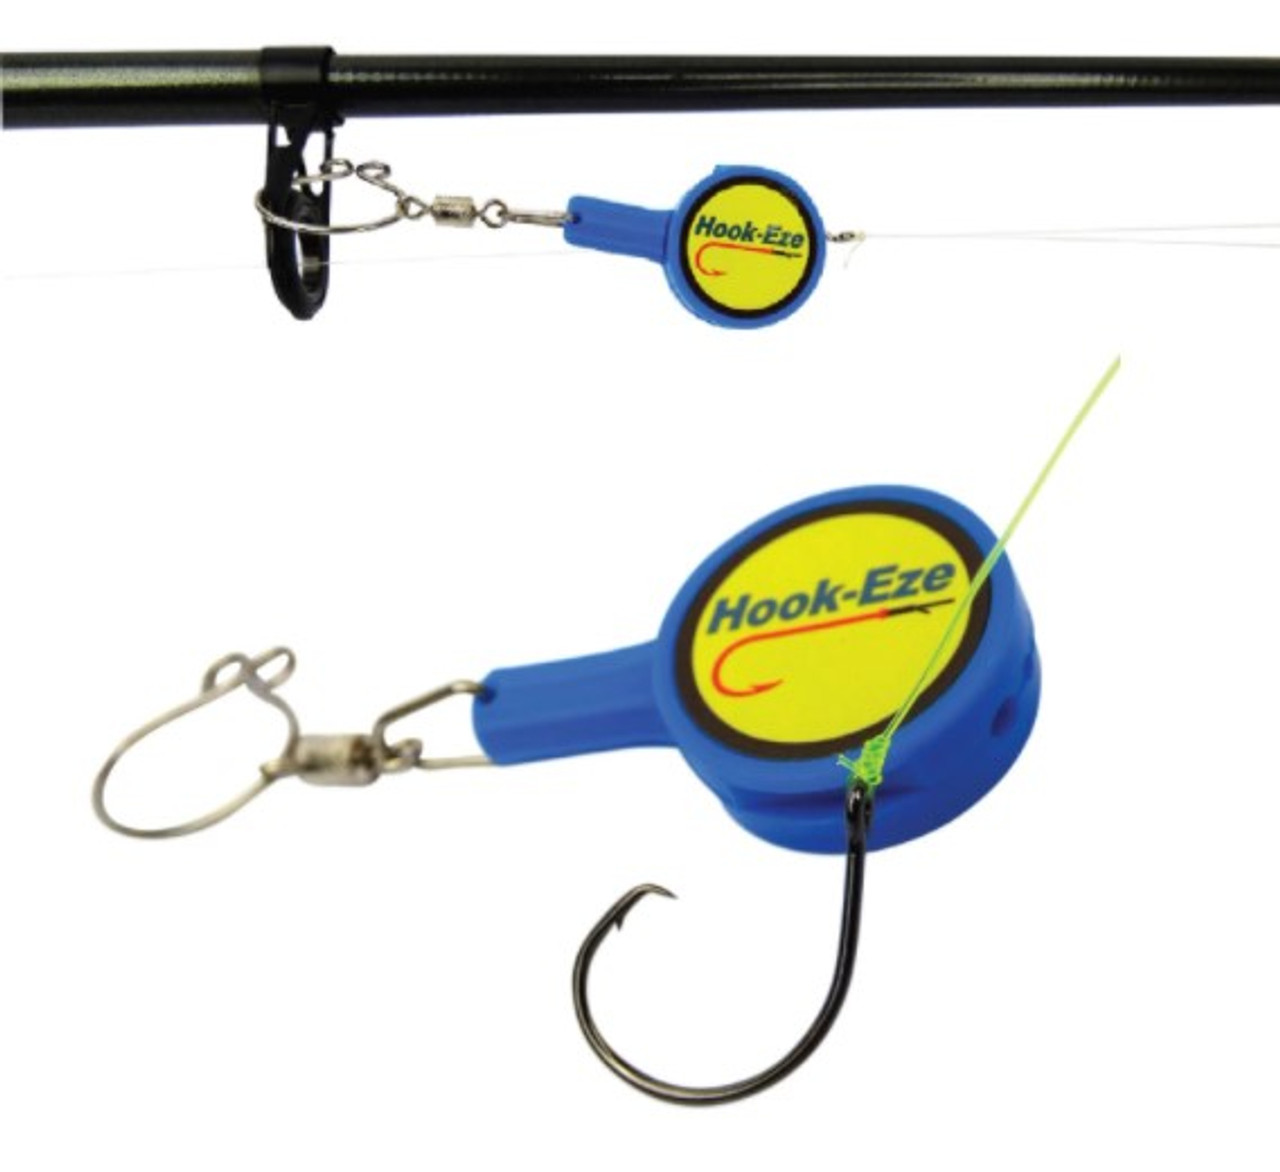 Hook-eze Fishing Knot Tying Tool-Original - Blue